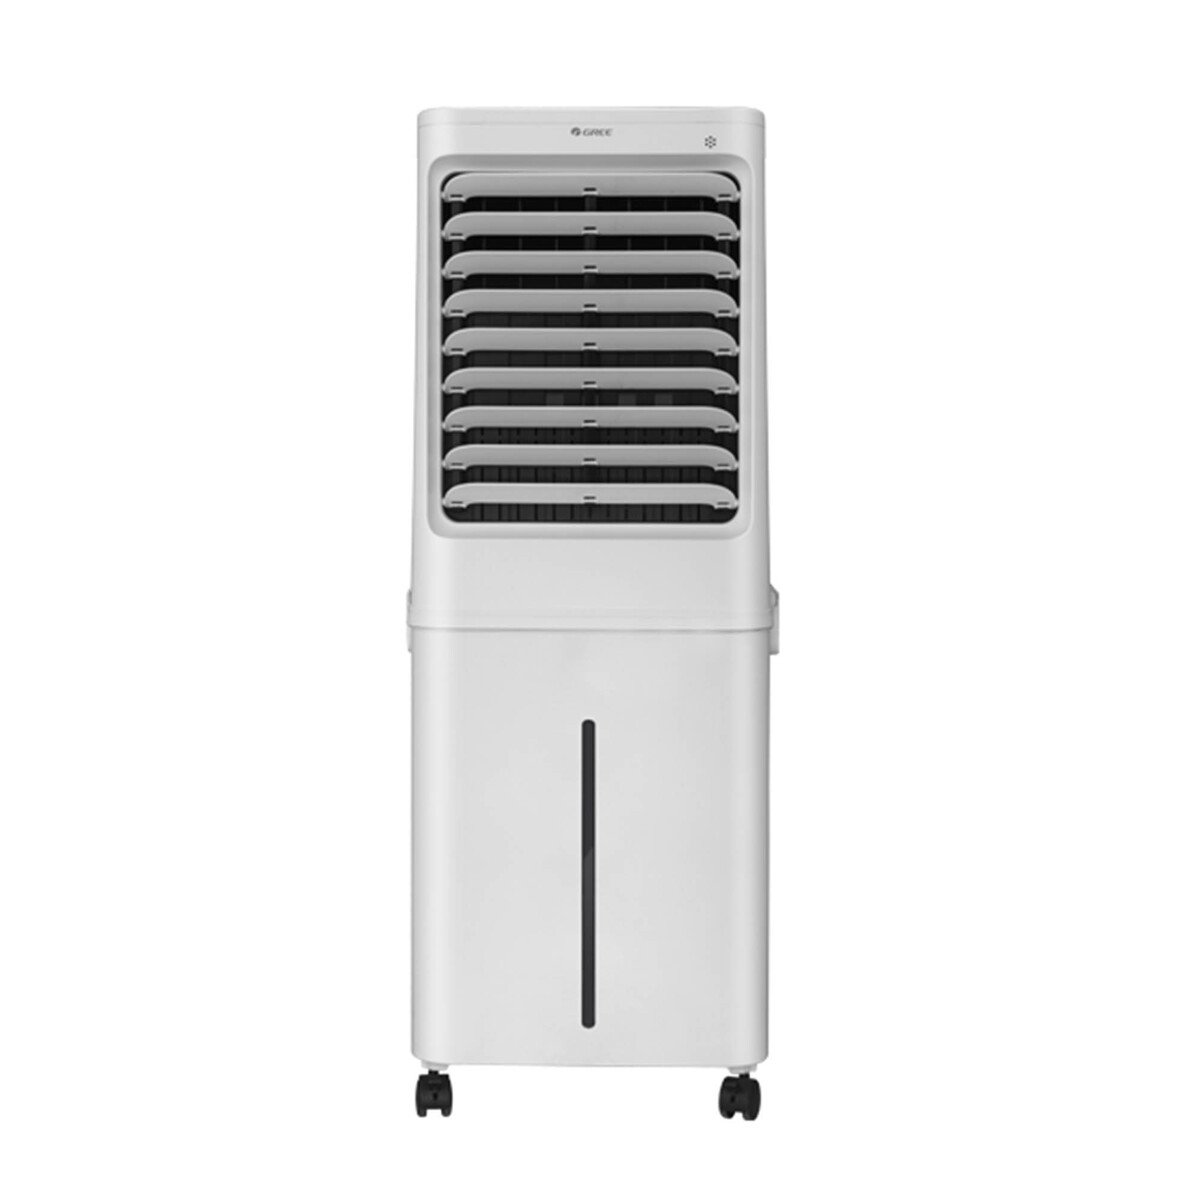 Gree Air Cooler KSWK-6001D 60 Liter